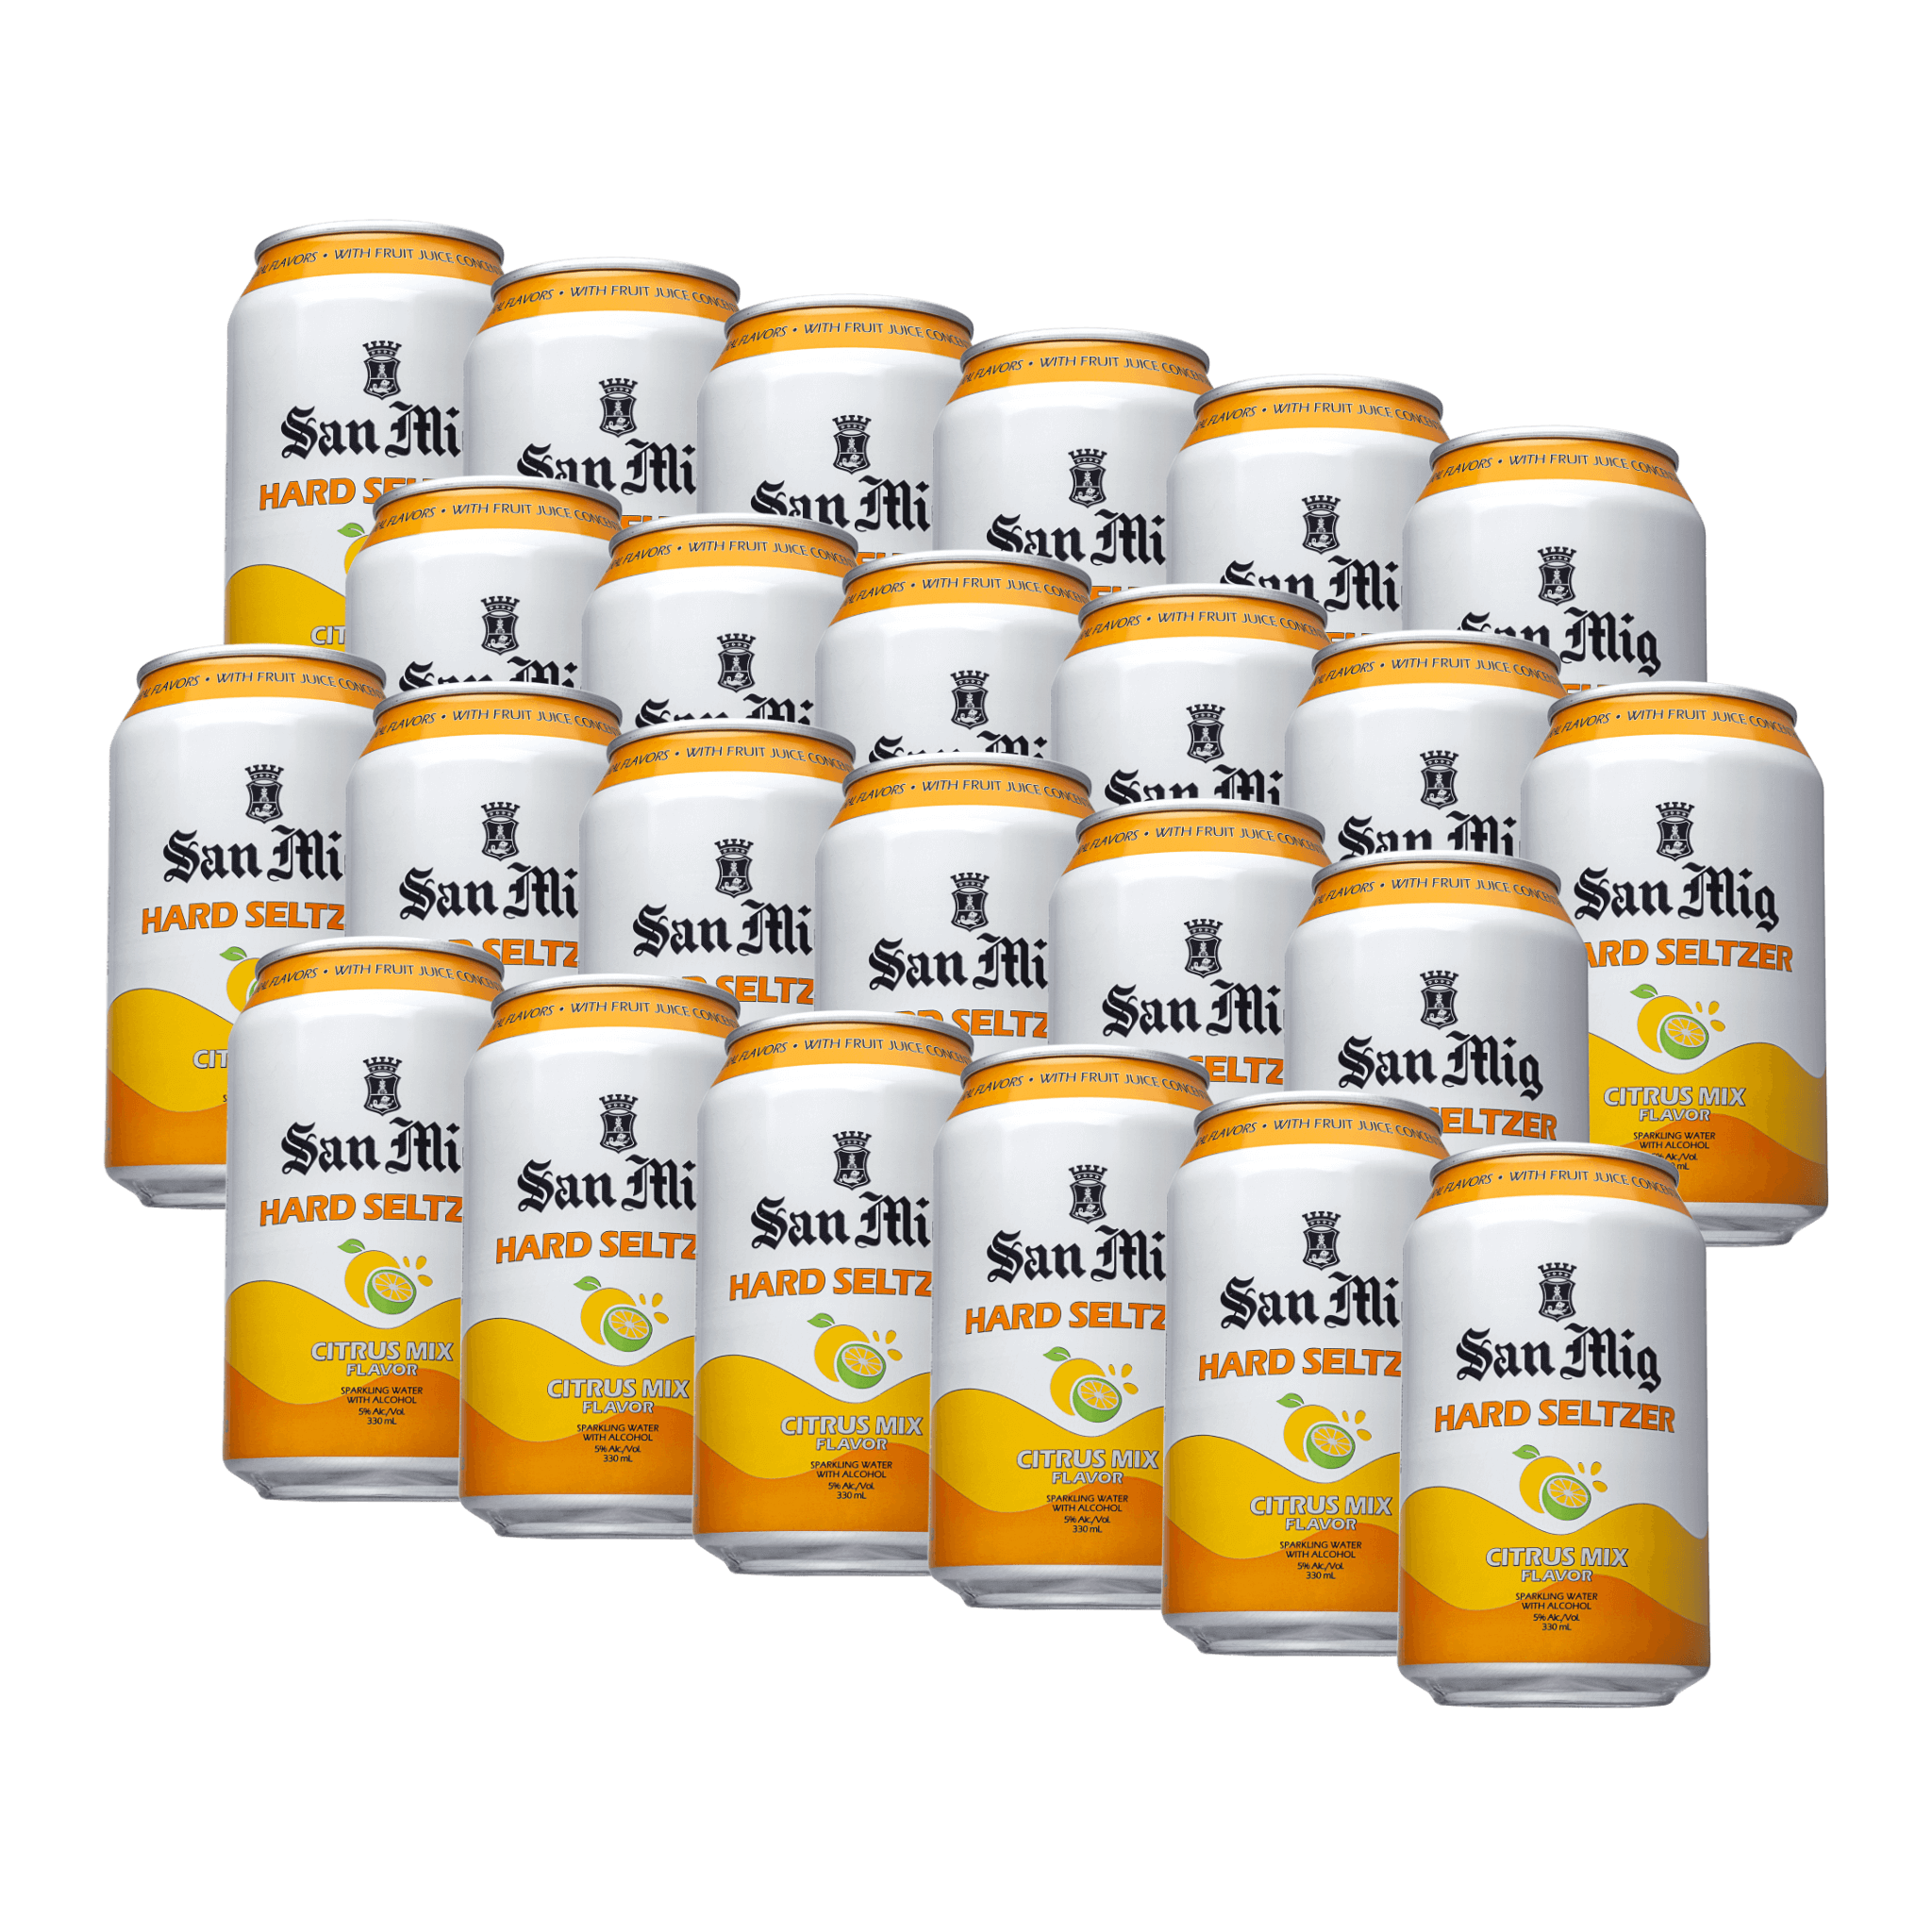 San Mig Hard Seltzer Citrus Mix 330ml Bundle of 24 at ₱1416.00